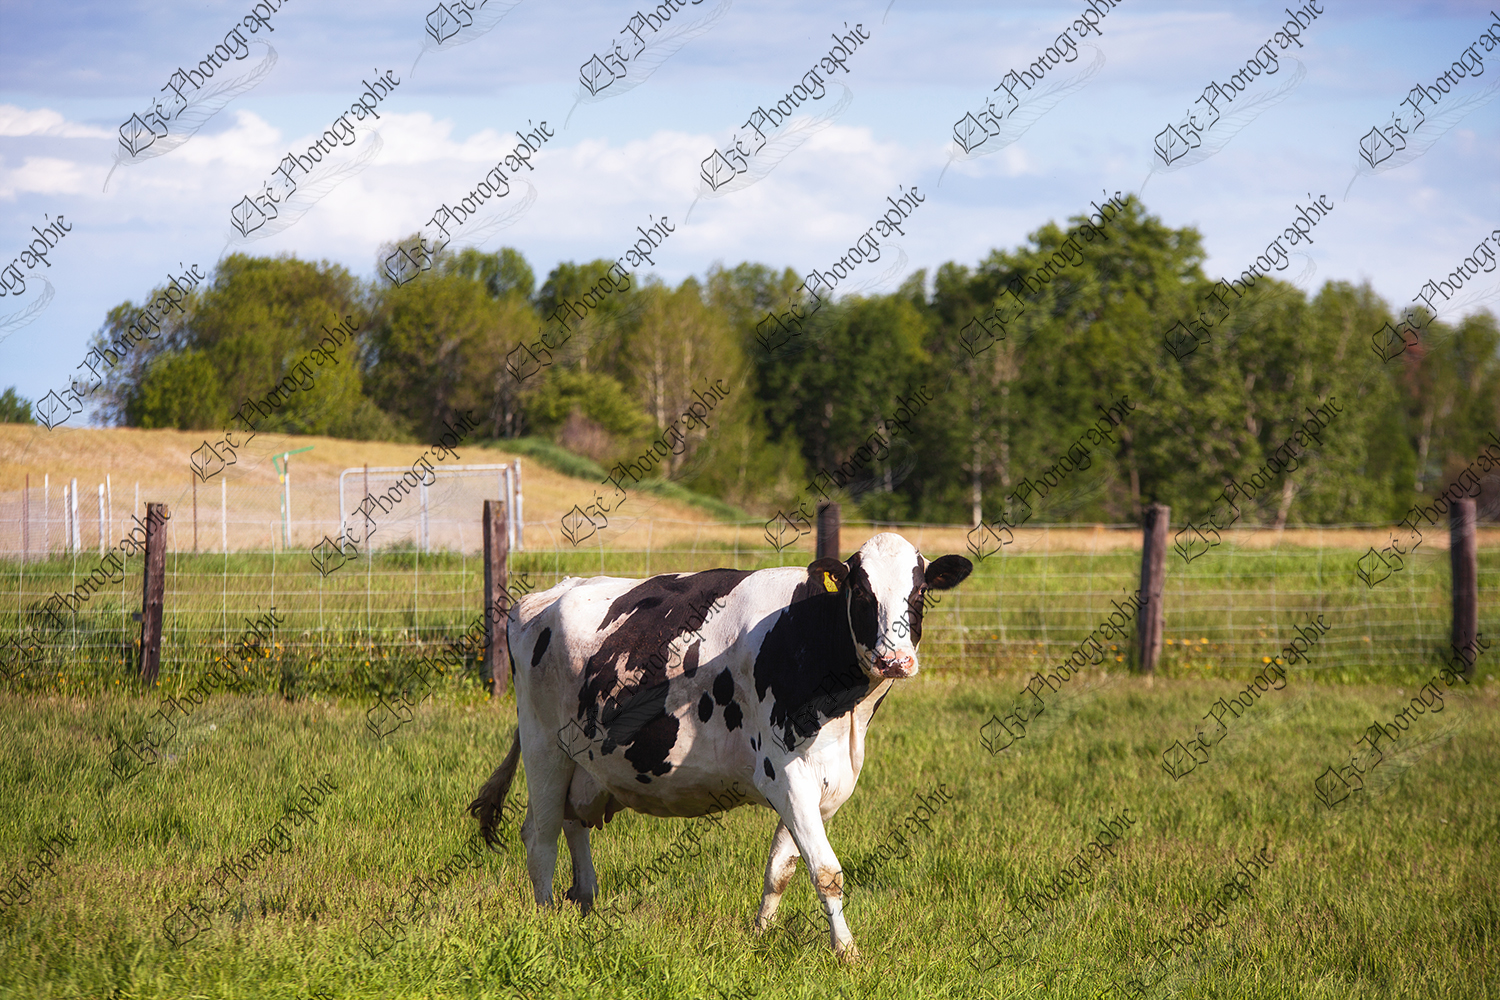 elze_photo_1250_vache_exercice_marche_holstein_cow_pasture